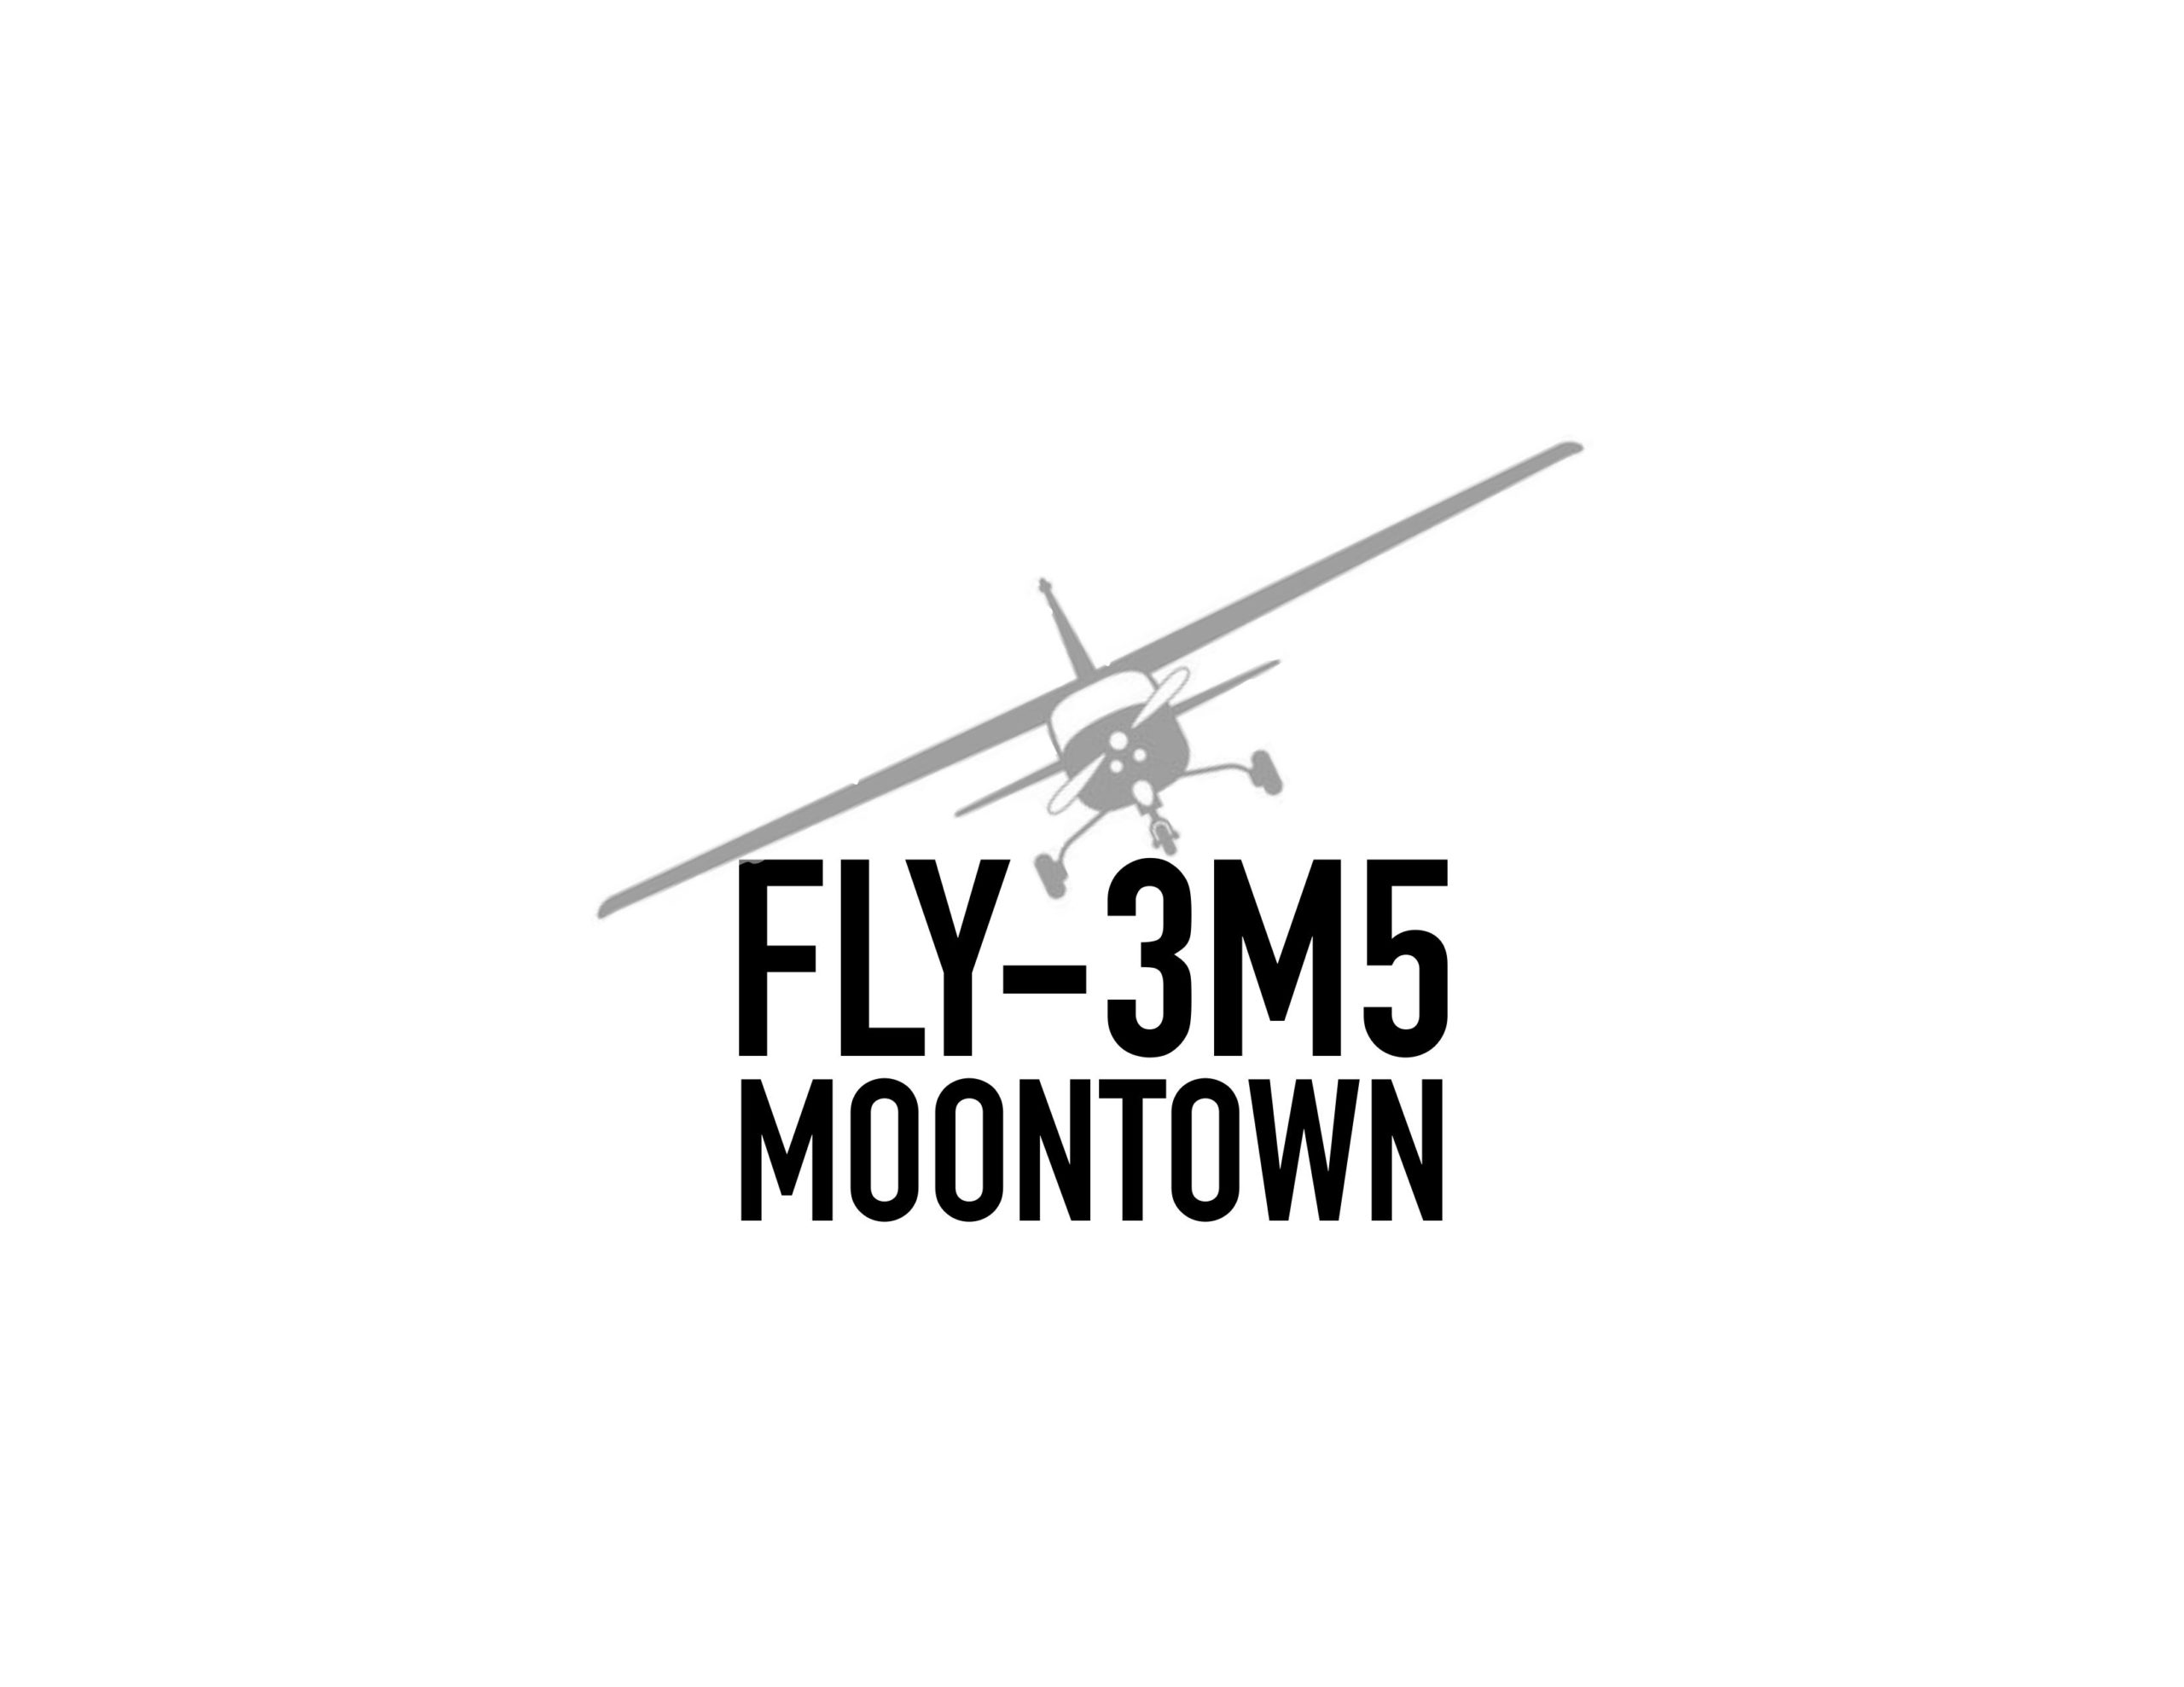 Moontown Airport 